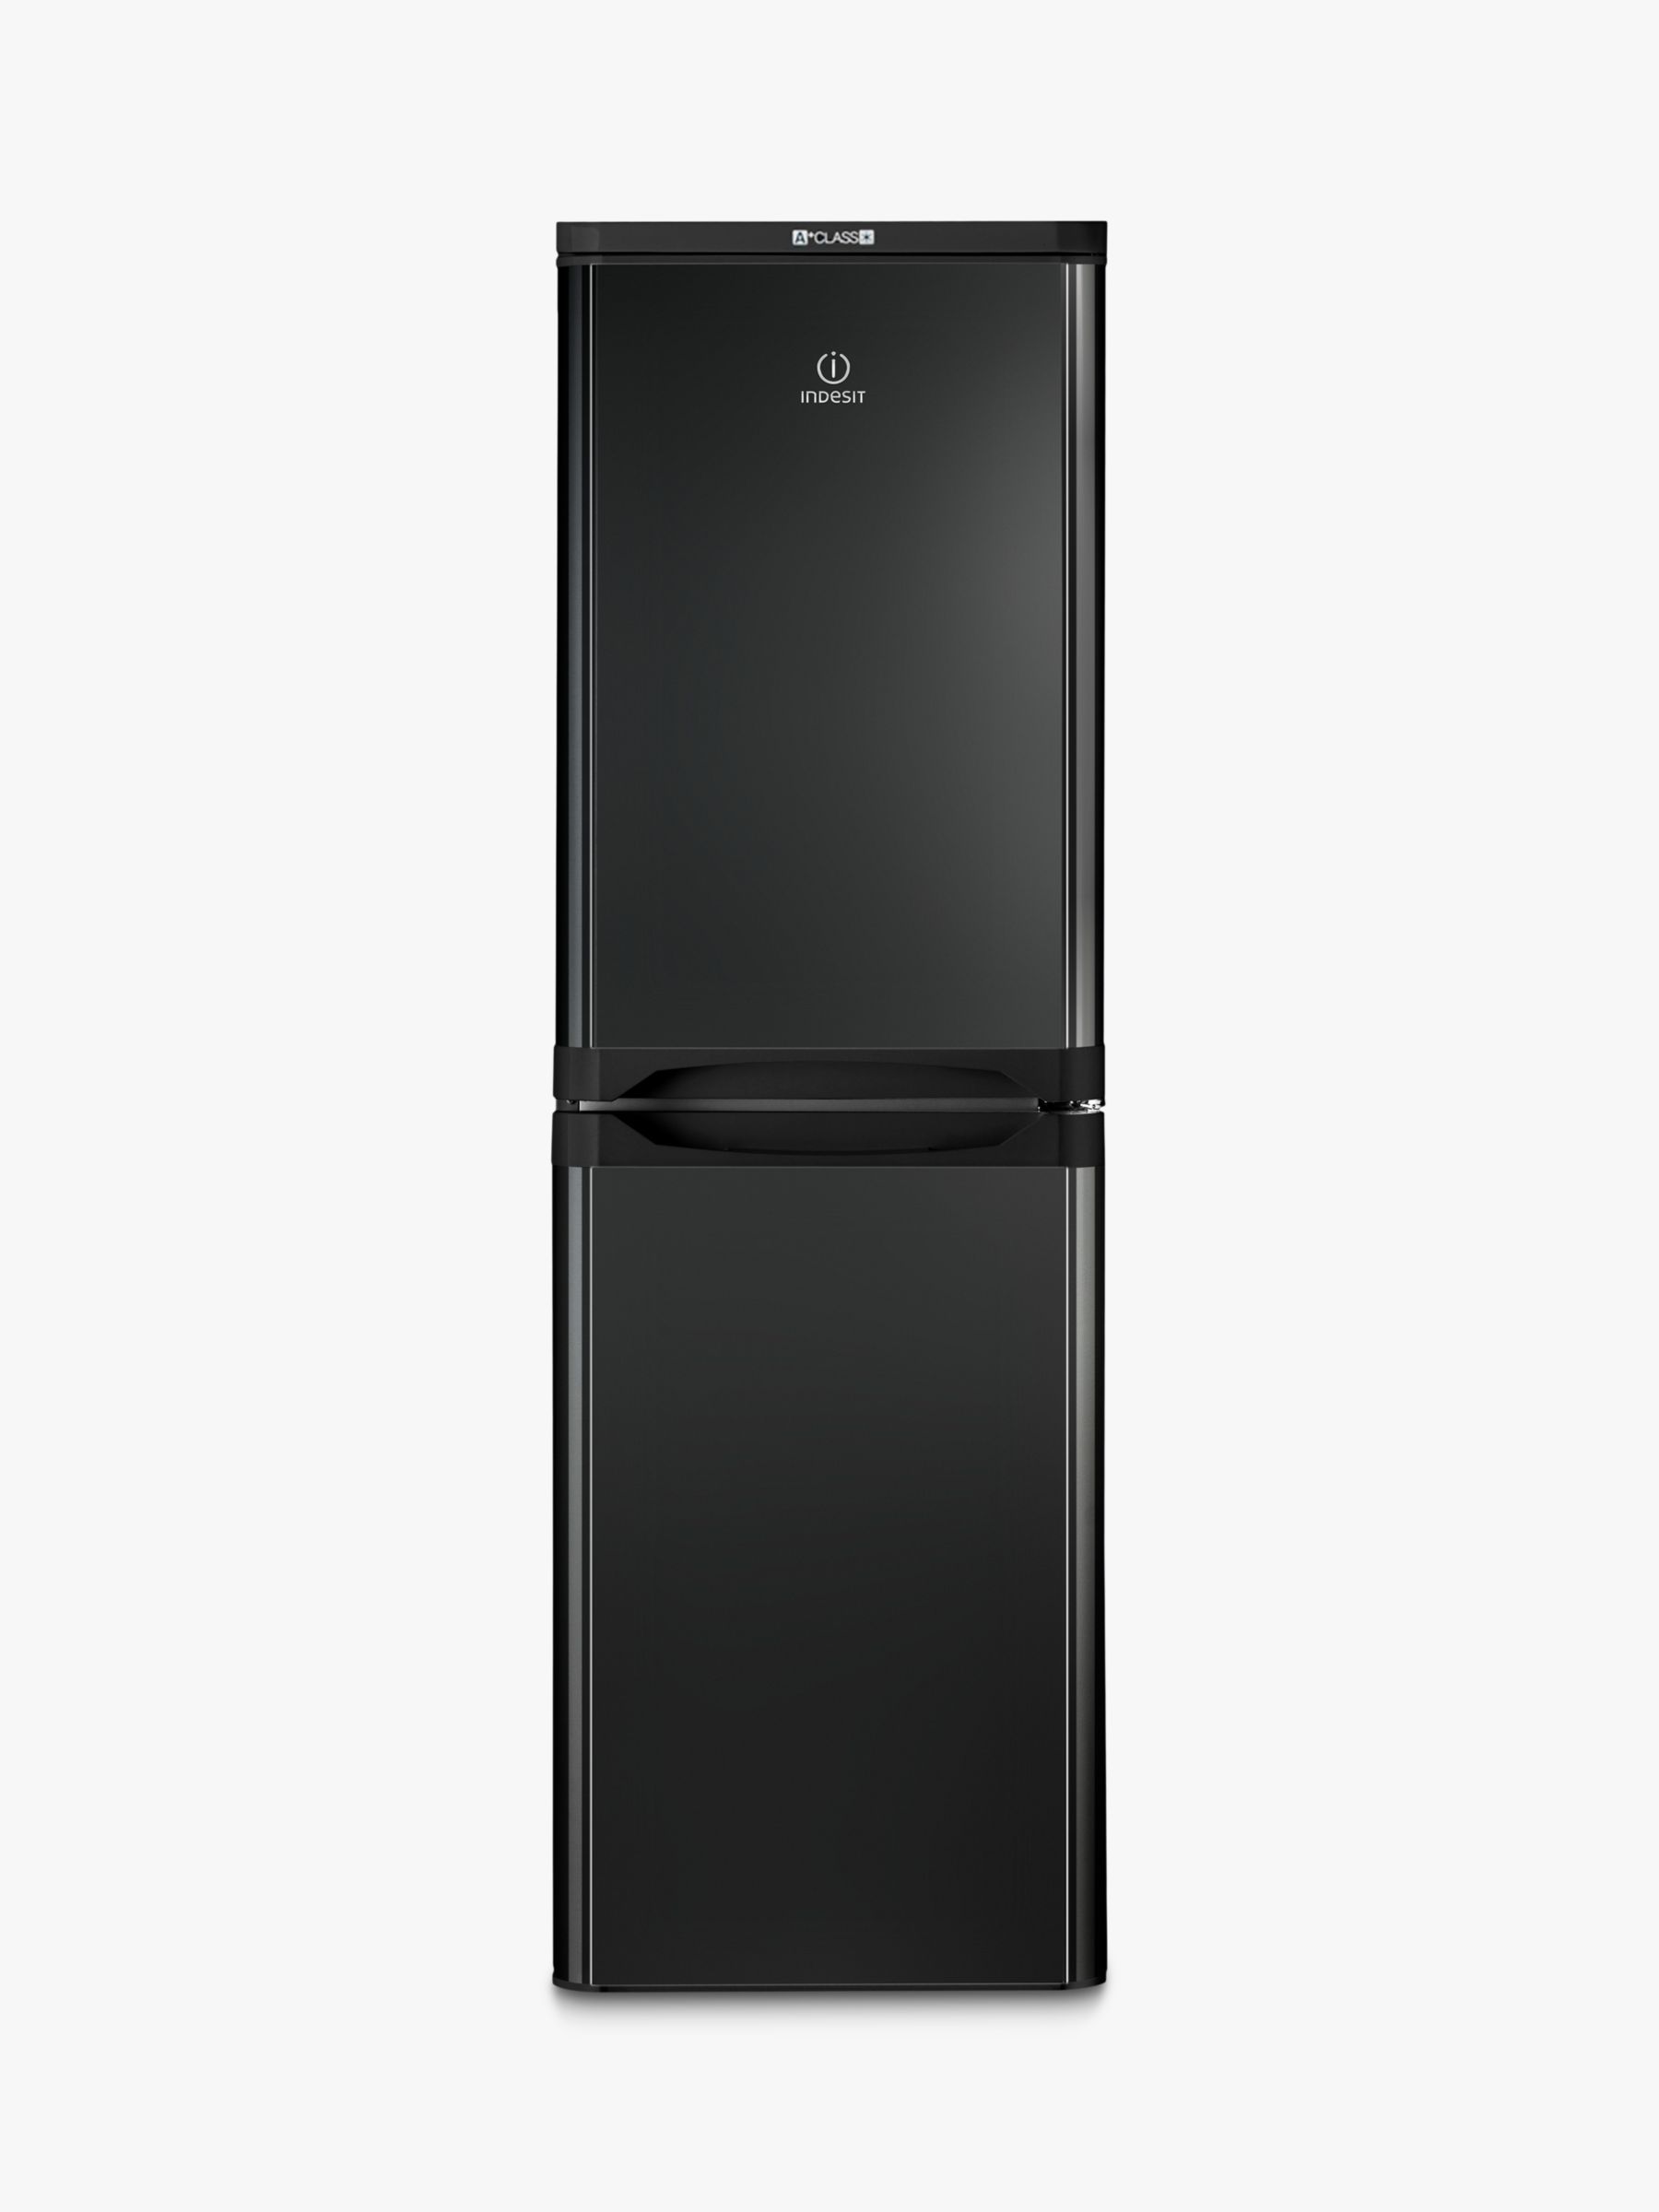 Indesit IBD5517BUK Freestanding Fridge-Freezer, A+ Energy Rating, 54.5cm Wide, Black